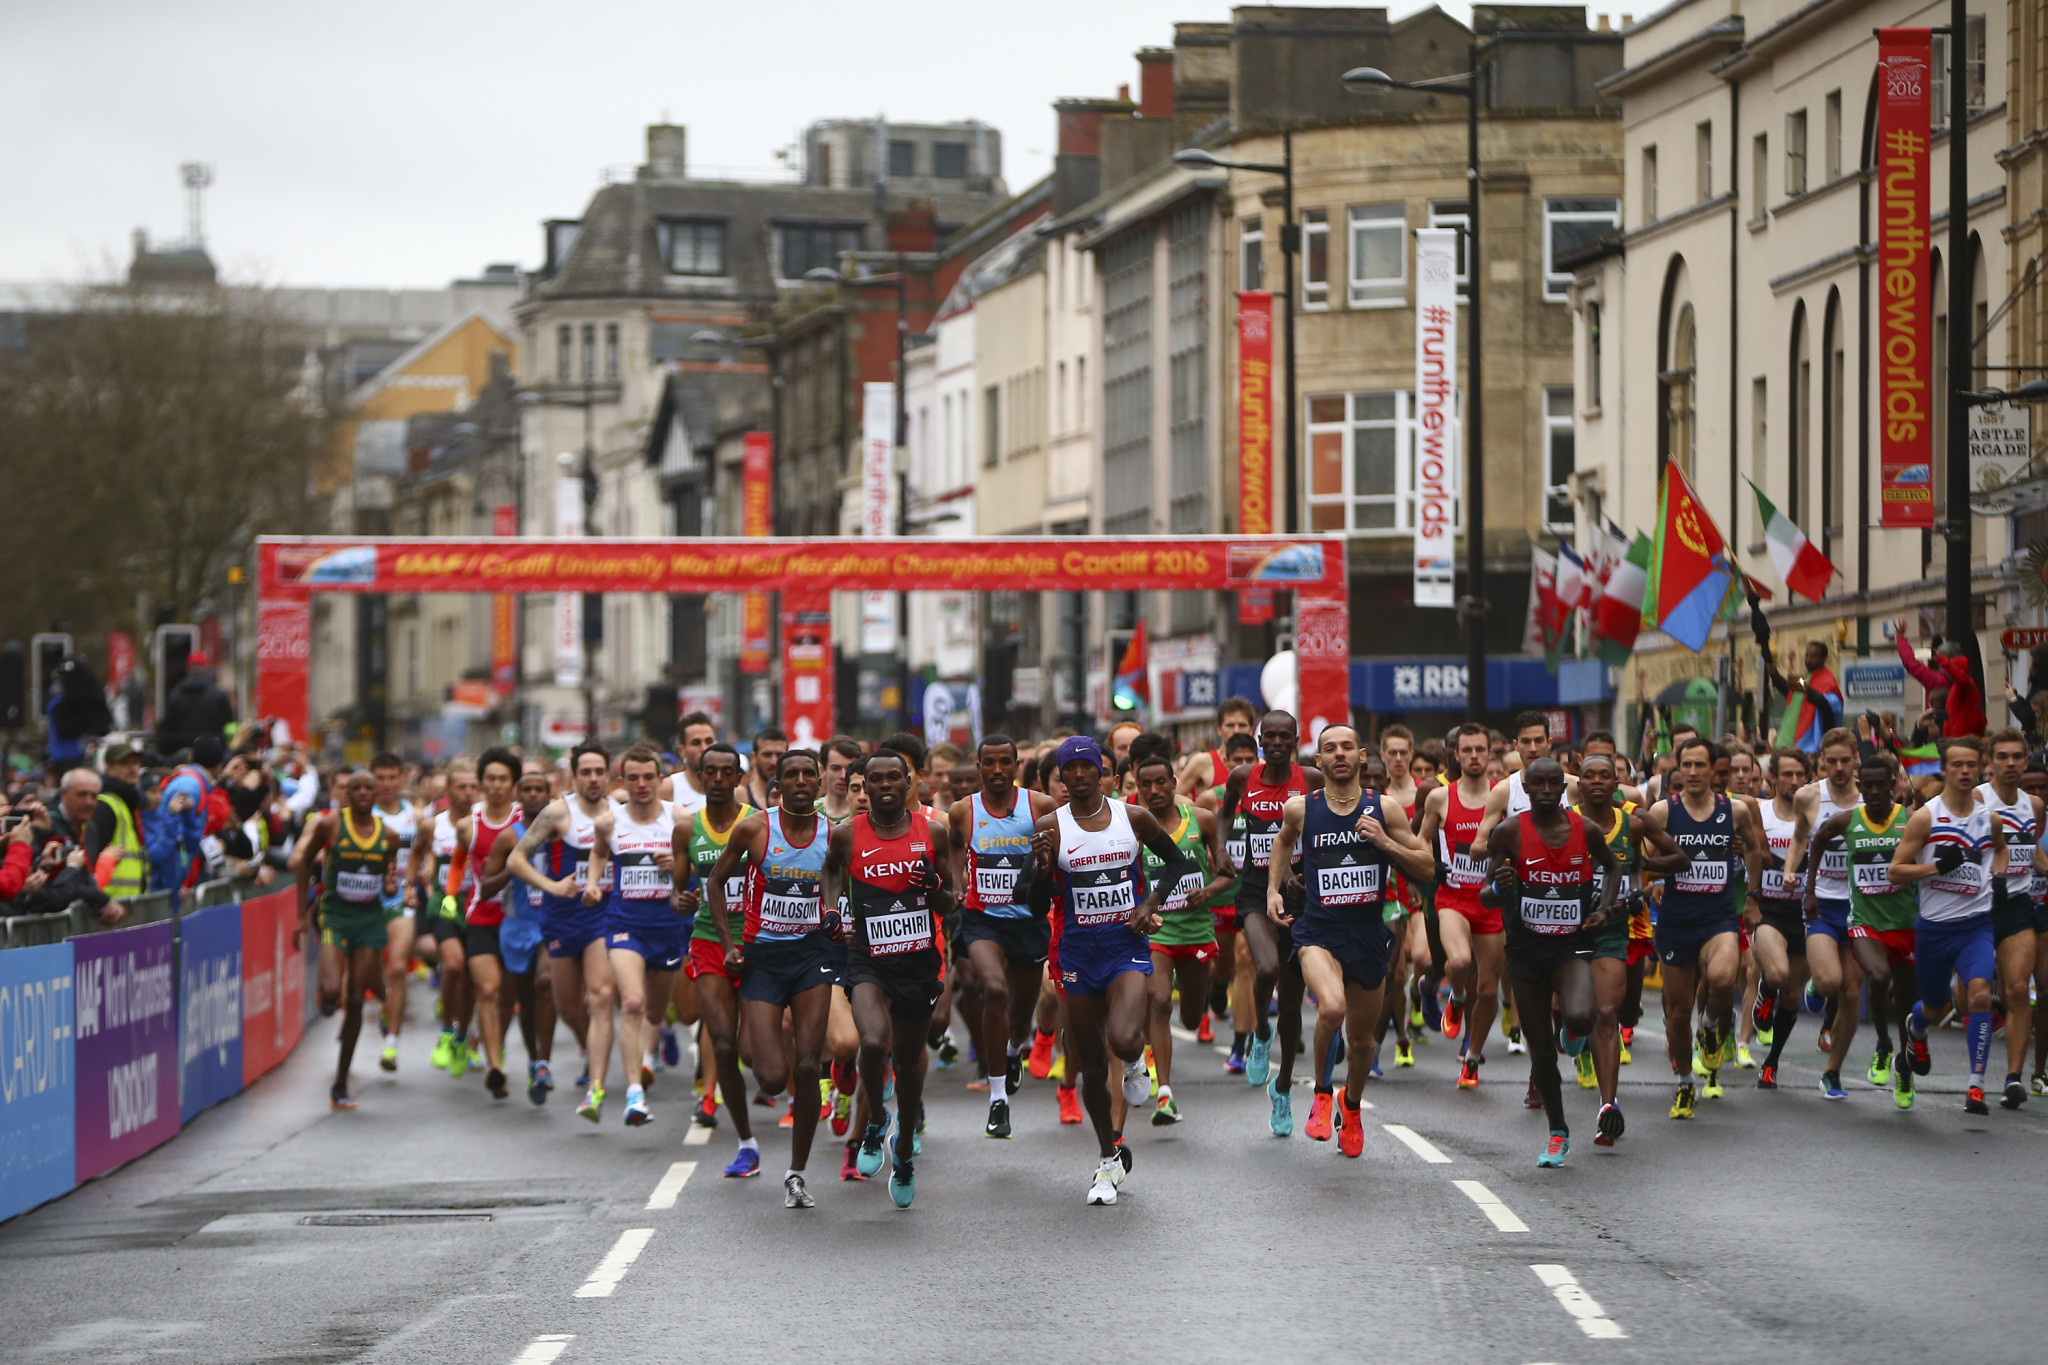 Cardiff Half Marathon postponed to 2022 due to COVID-19 restrictions